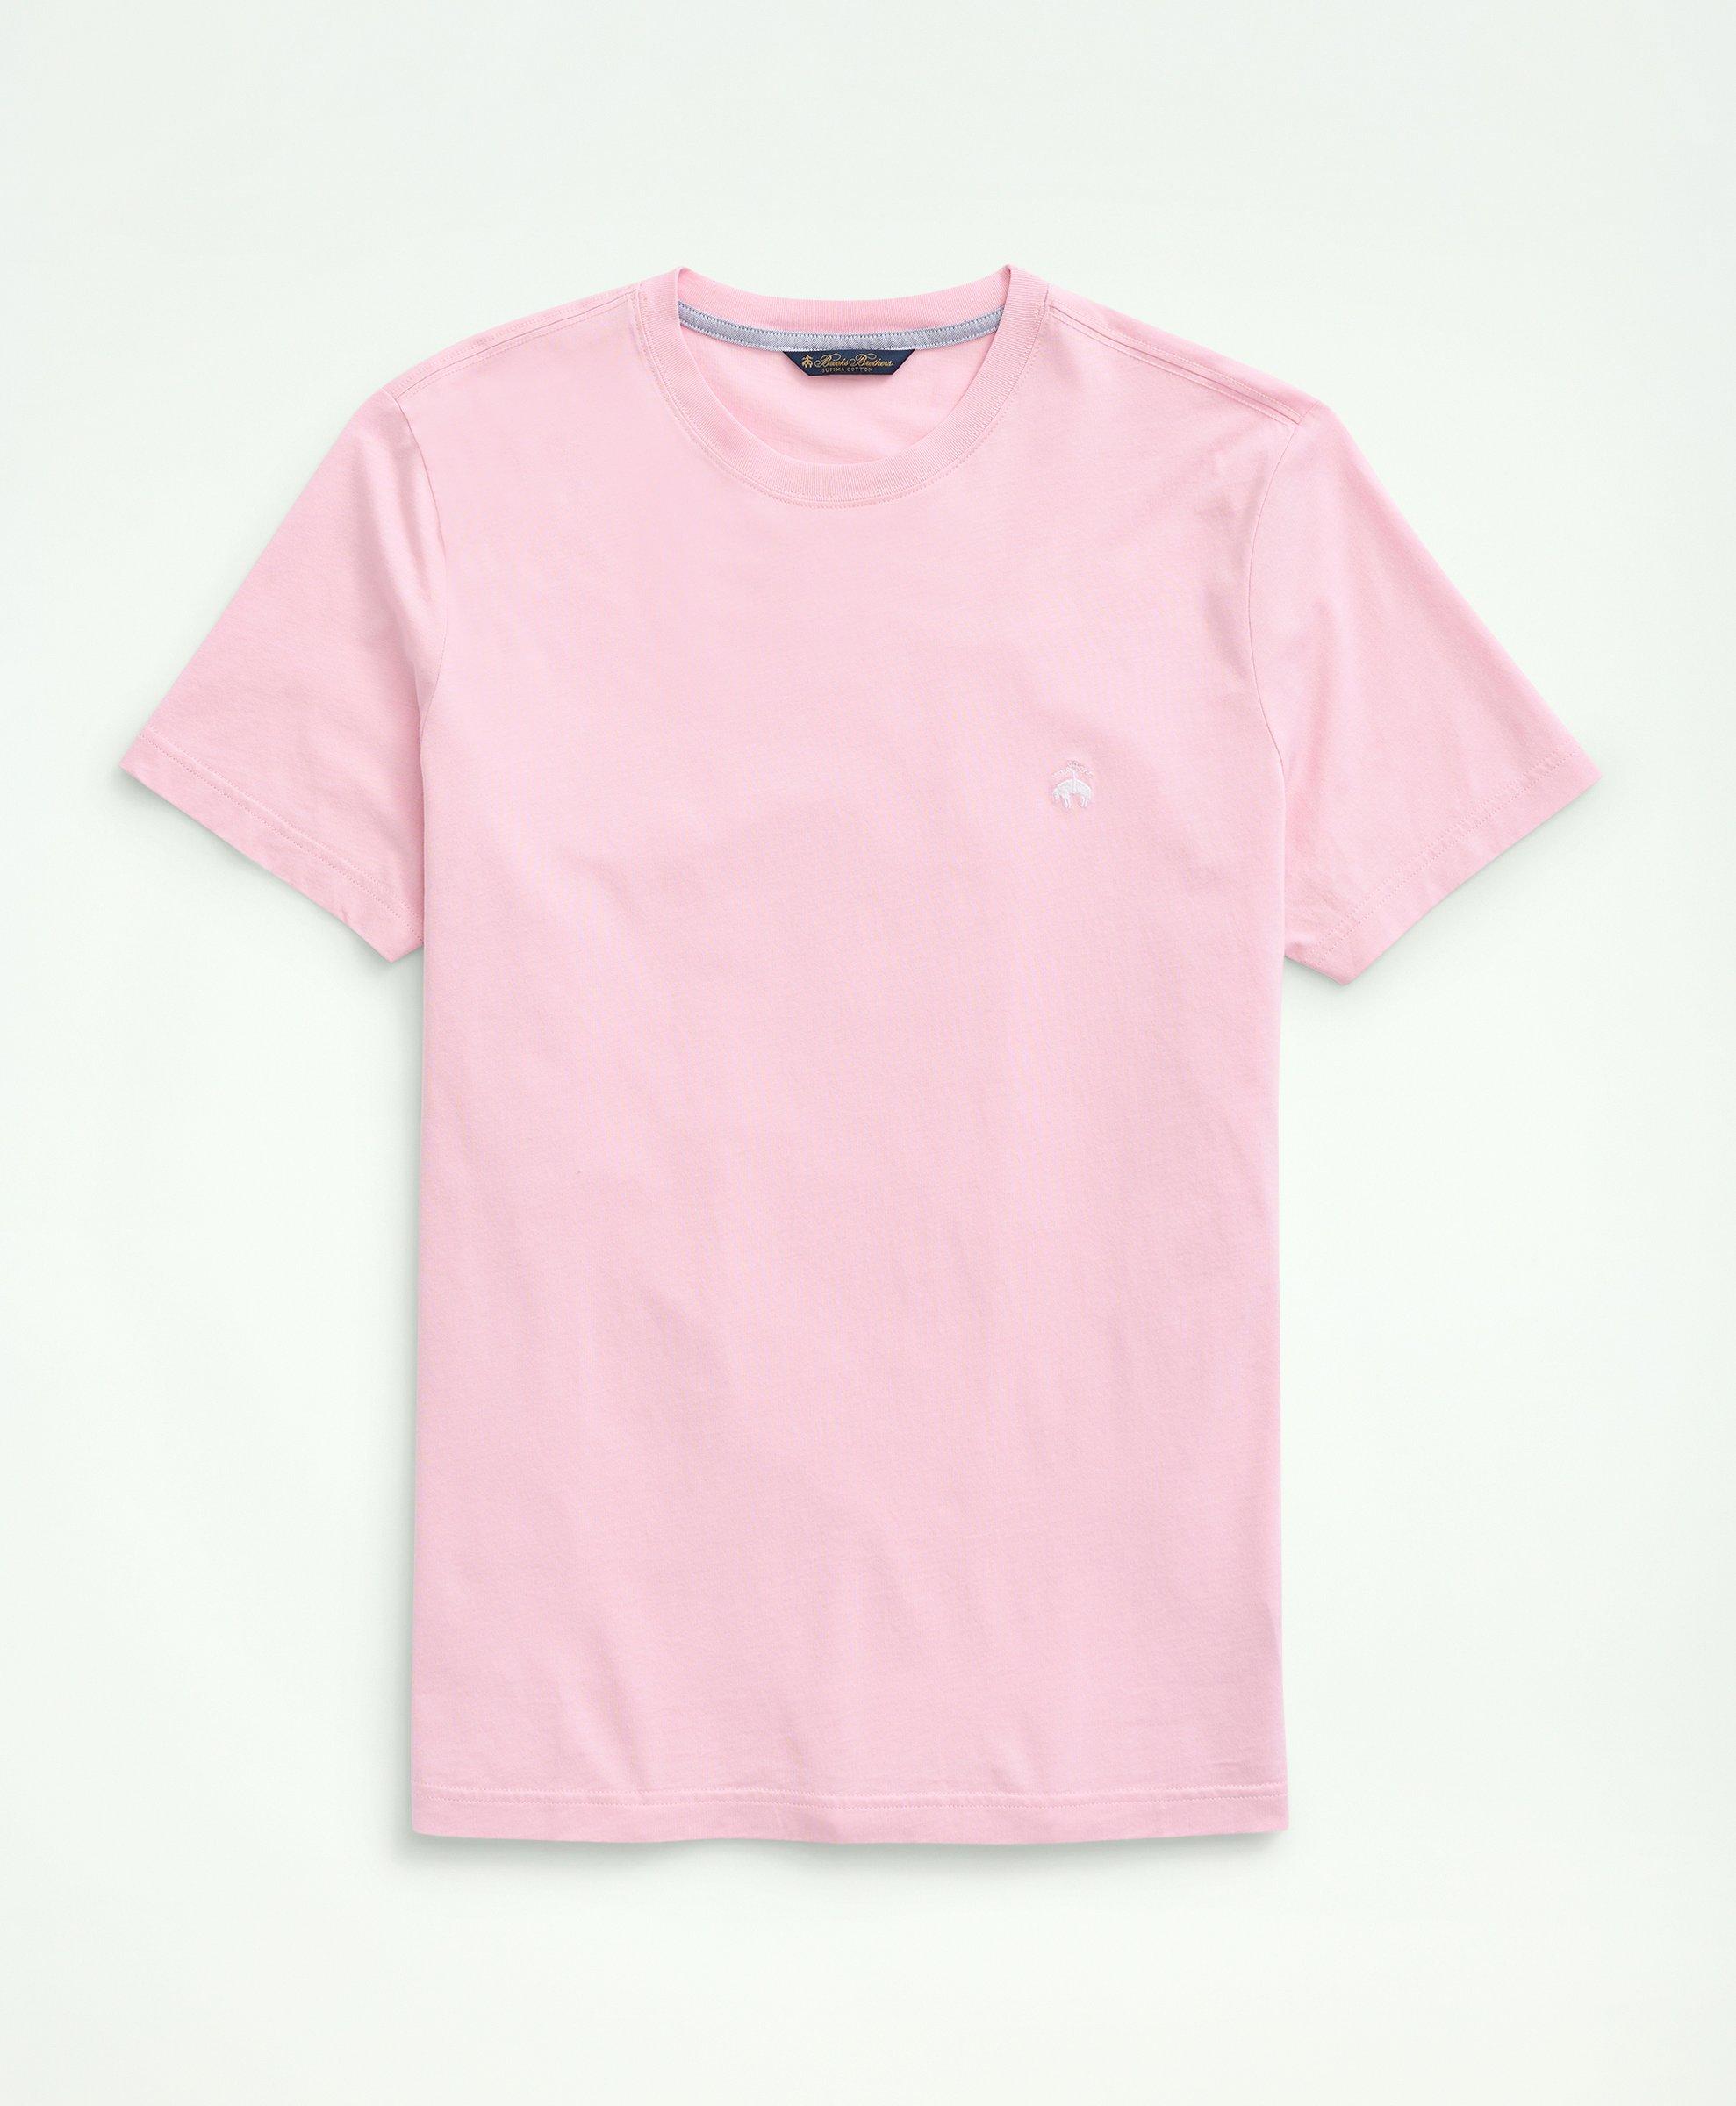 Brooks Brothers Big & Tall Supima Cotton T-shirt | Pink Heather | Size 2x Tall